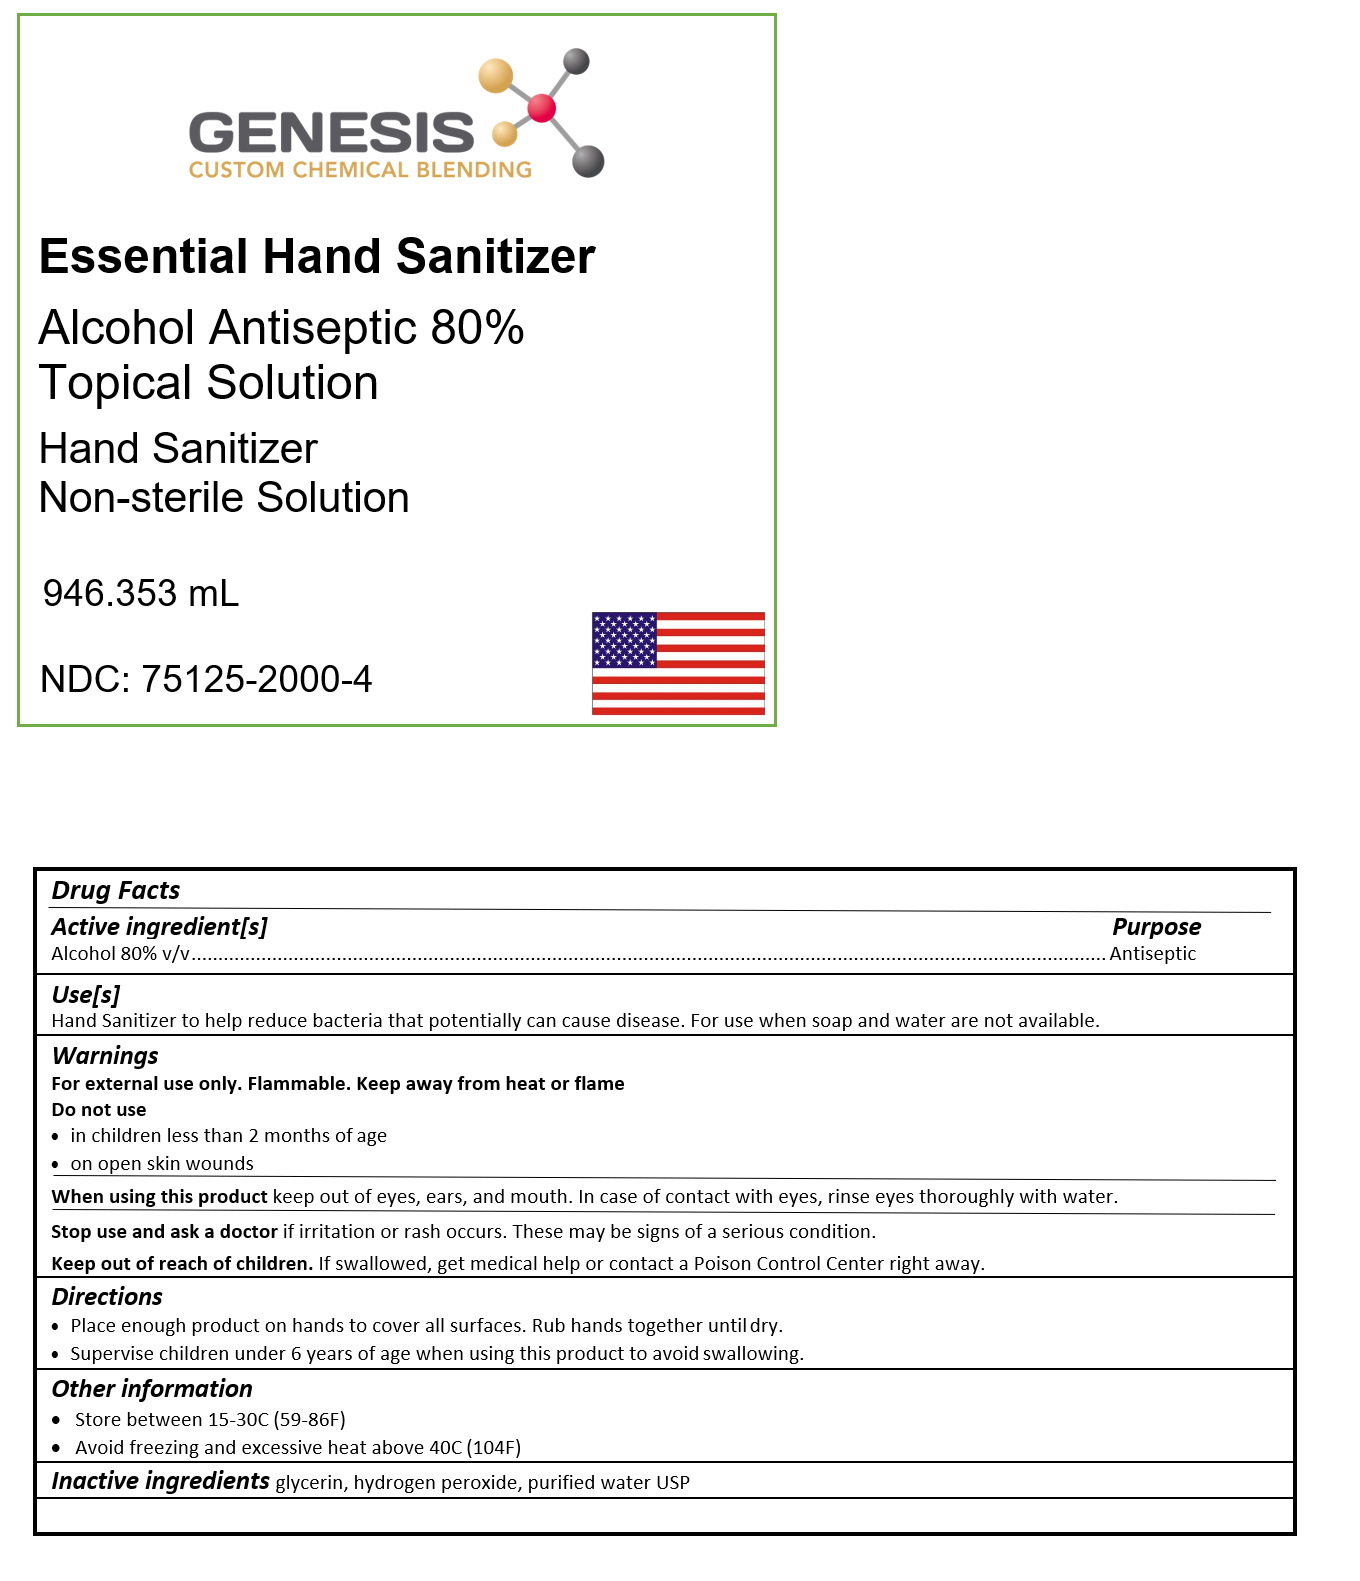 Ethanol80-handsan-consumer-75125-2000-4